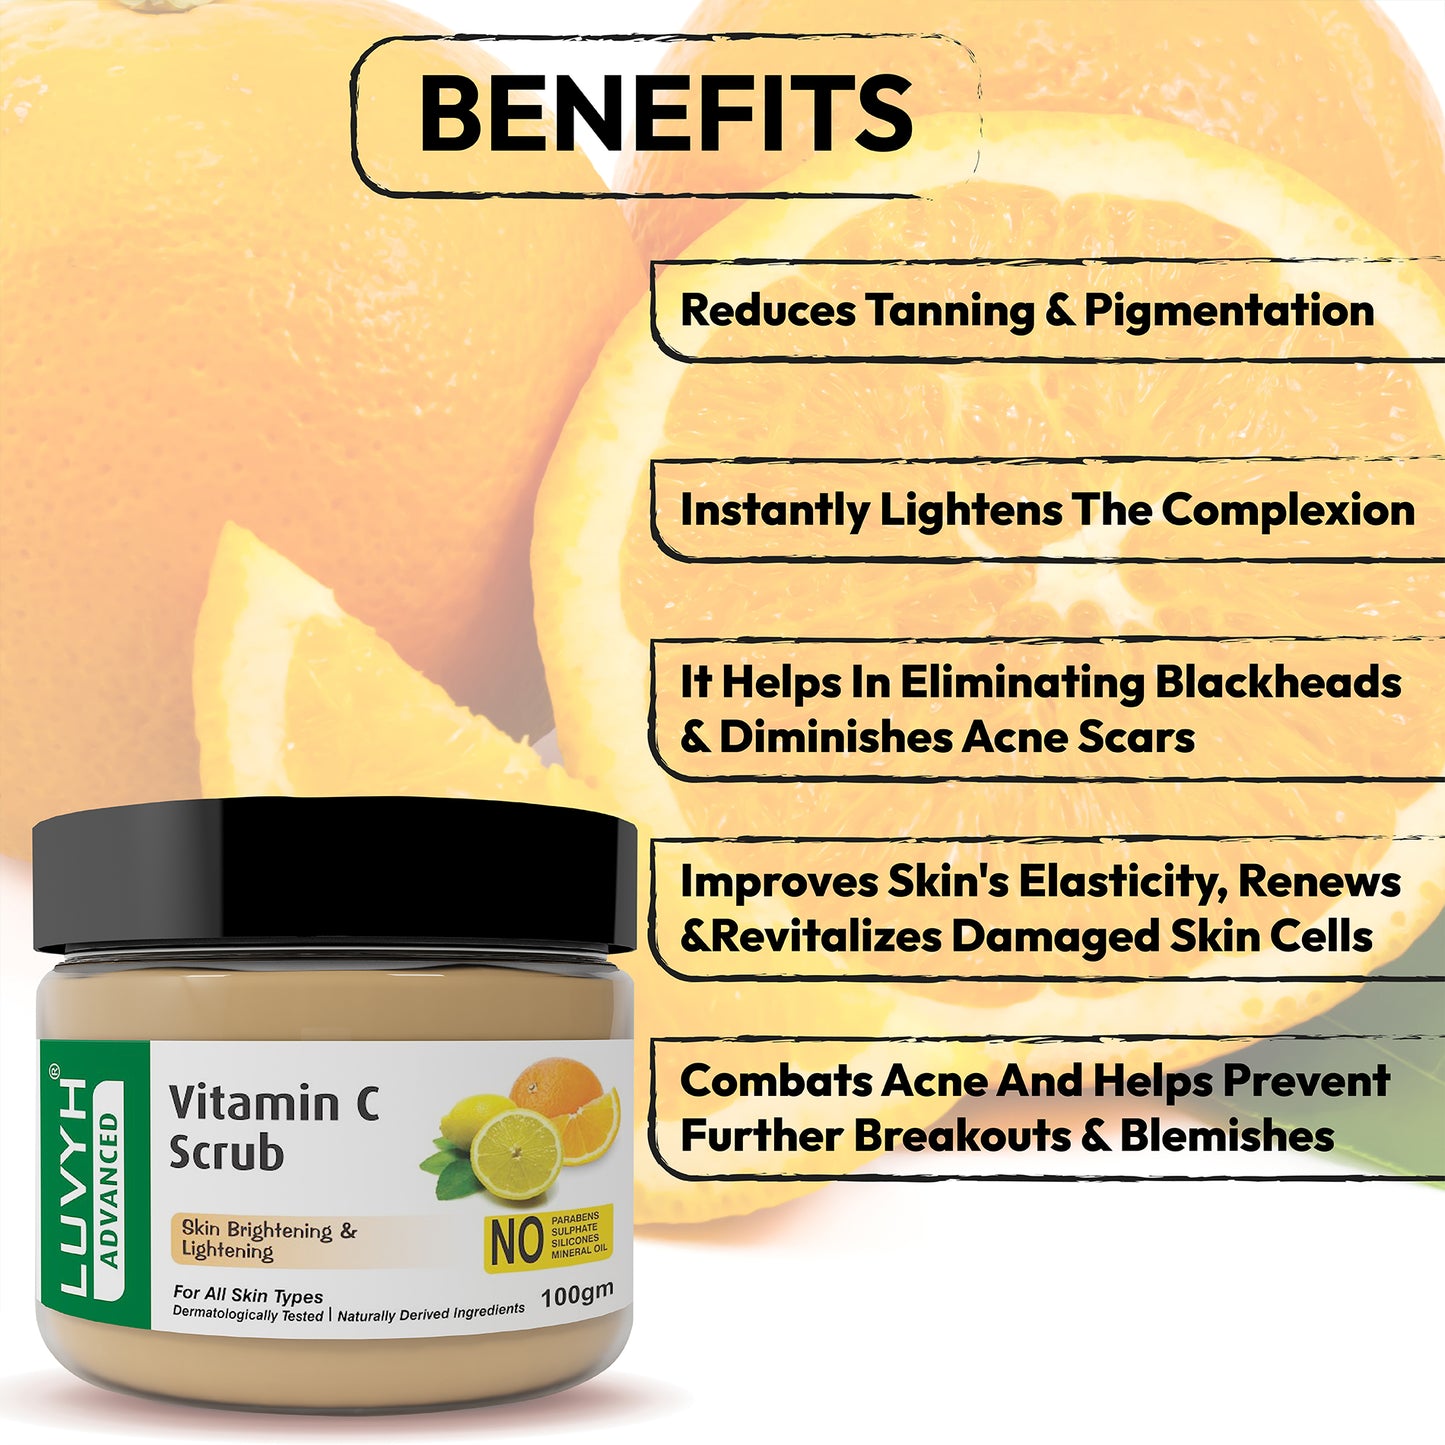 Benefits of Vitamin C Scrub 